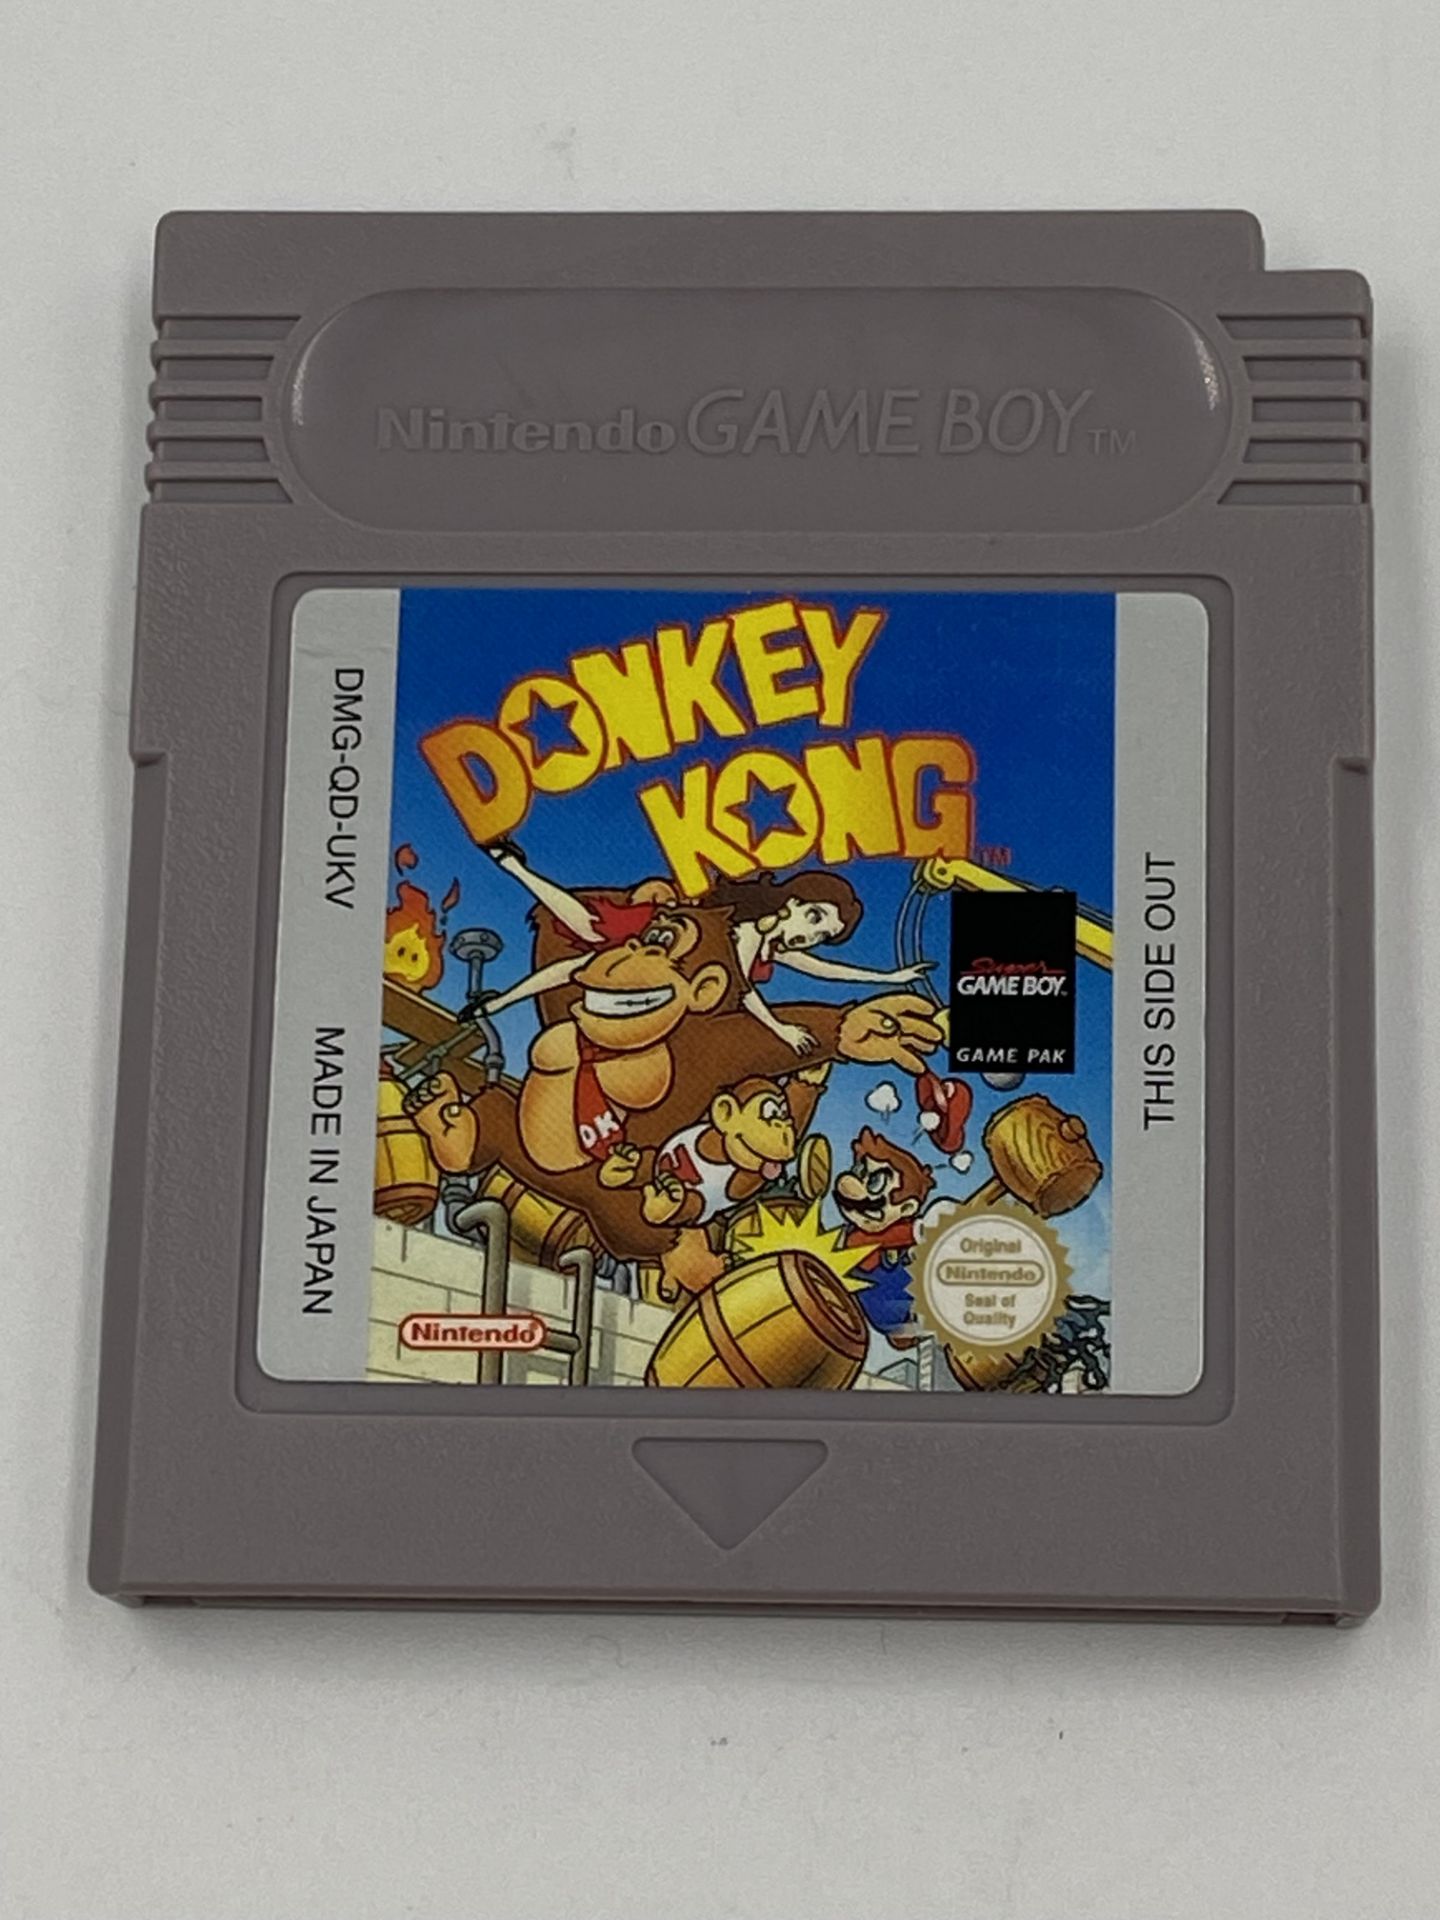 Nintendo Game Boy Donkey Kong Land - Image 2 of 2